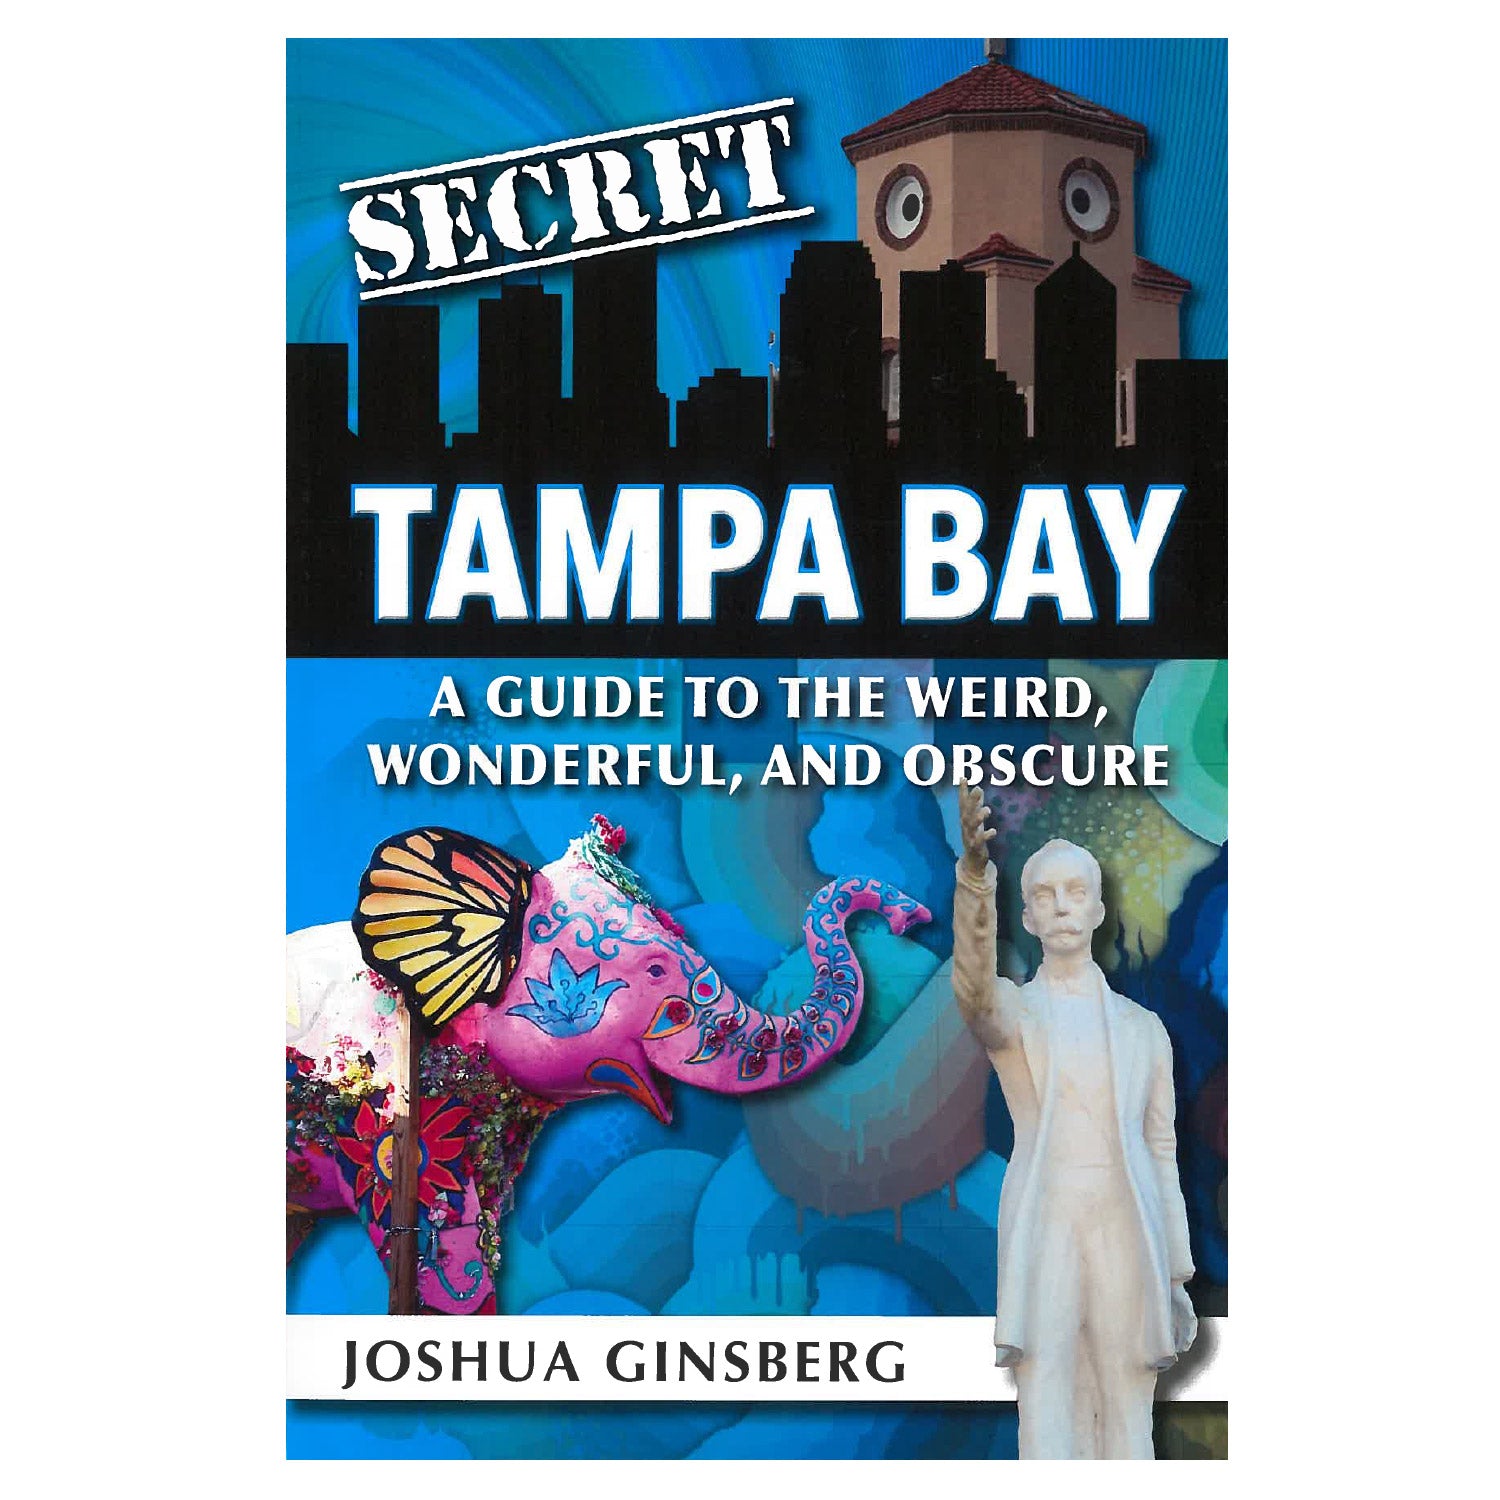 Secret Tampa Bay Book